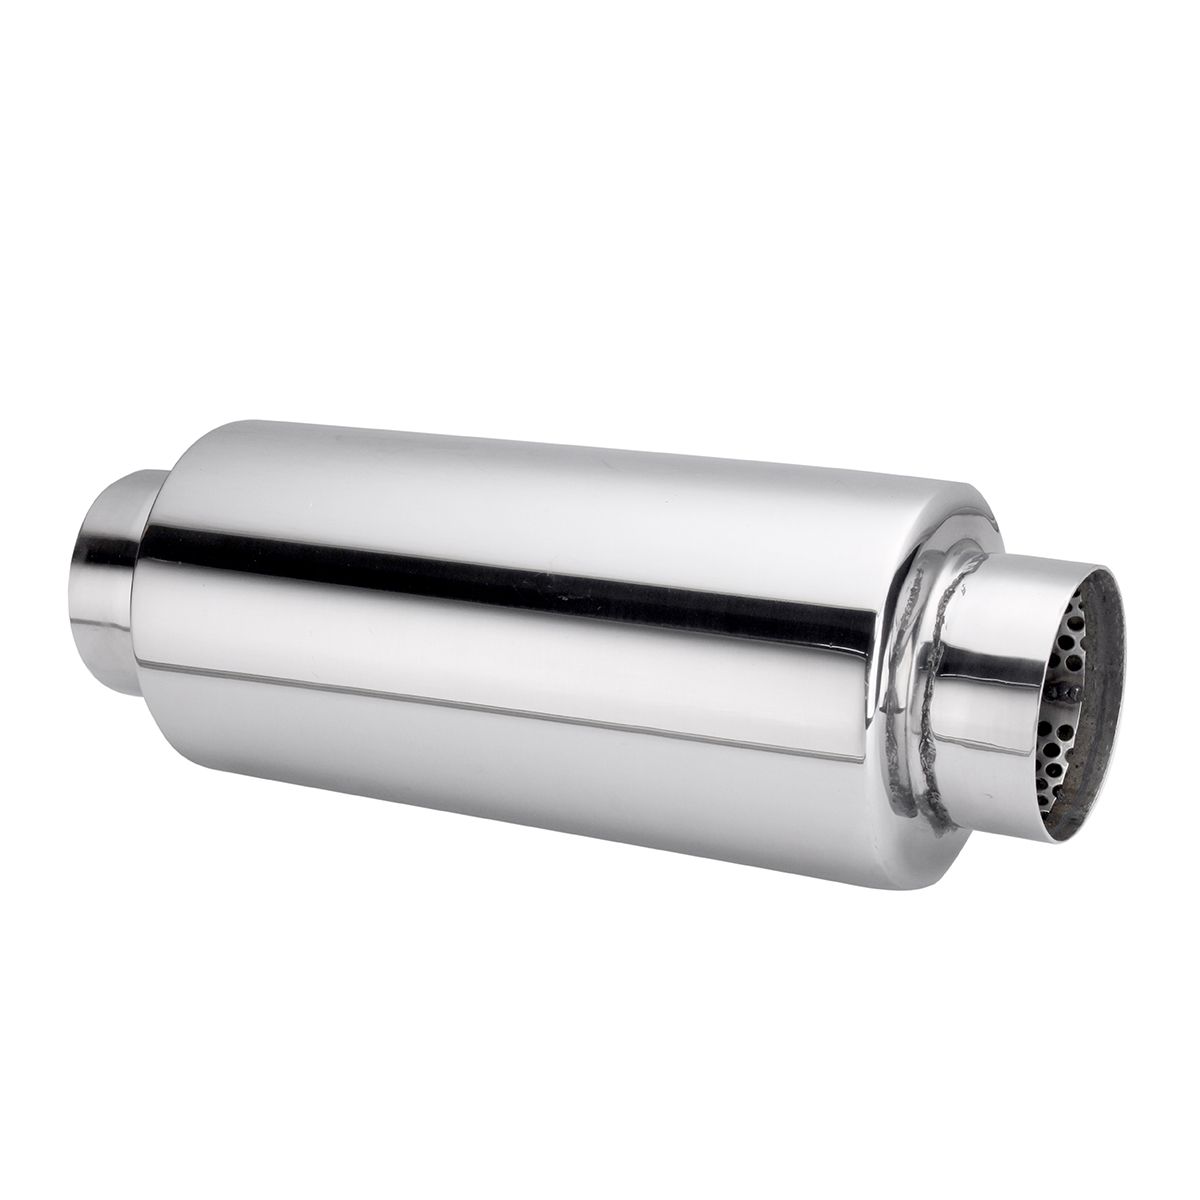 Universal-Exhaust-Muffler-Resonator-304-Stainless-Steel-25-Inch-Inelt-25-Inch-Outlet-1353243